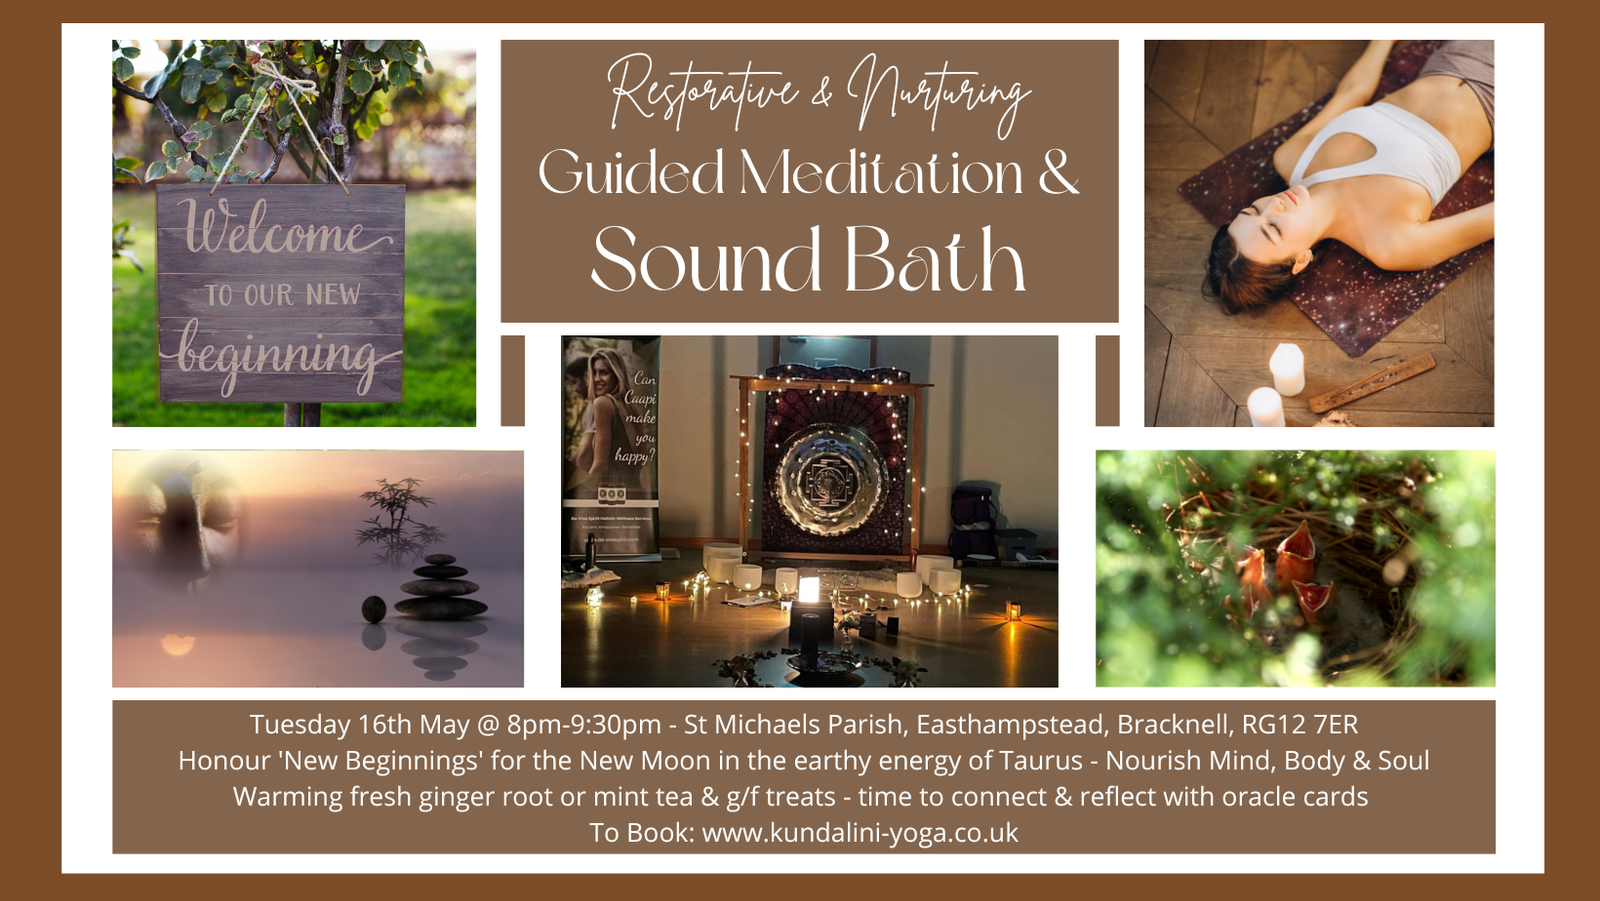 Sound bath event in bracknell